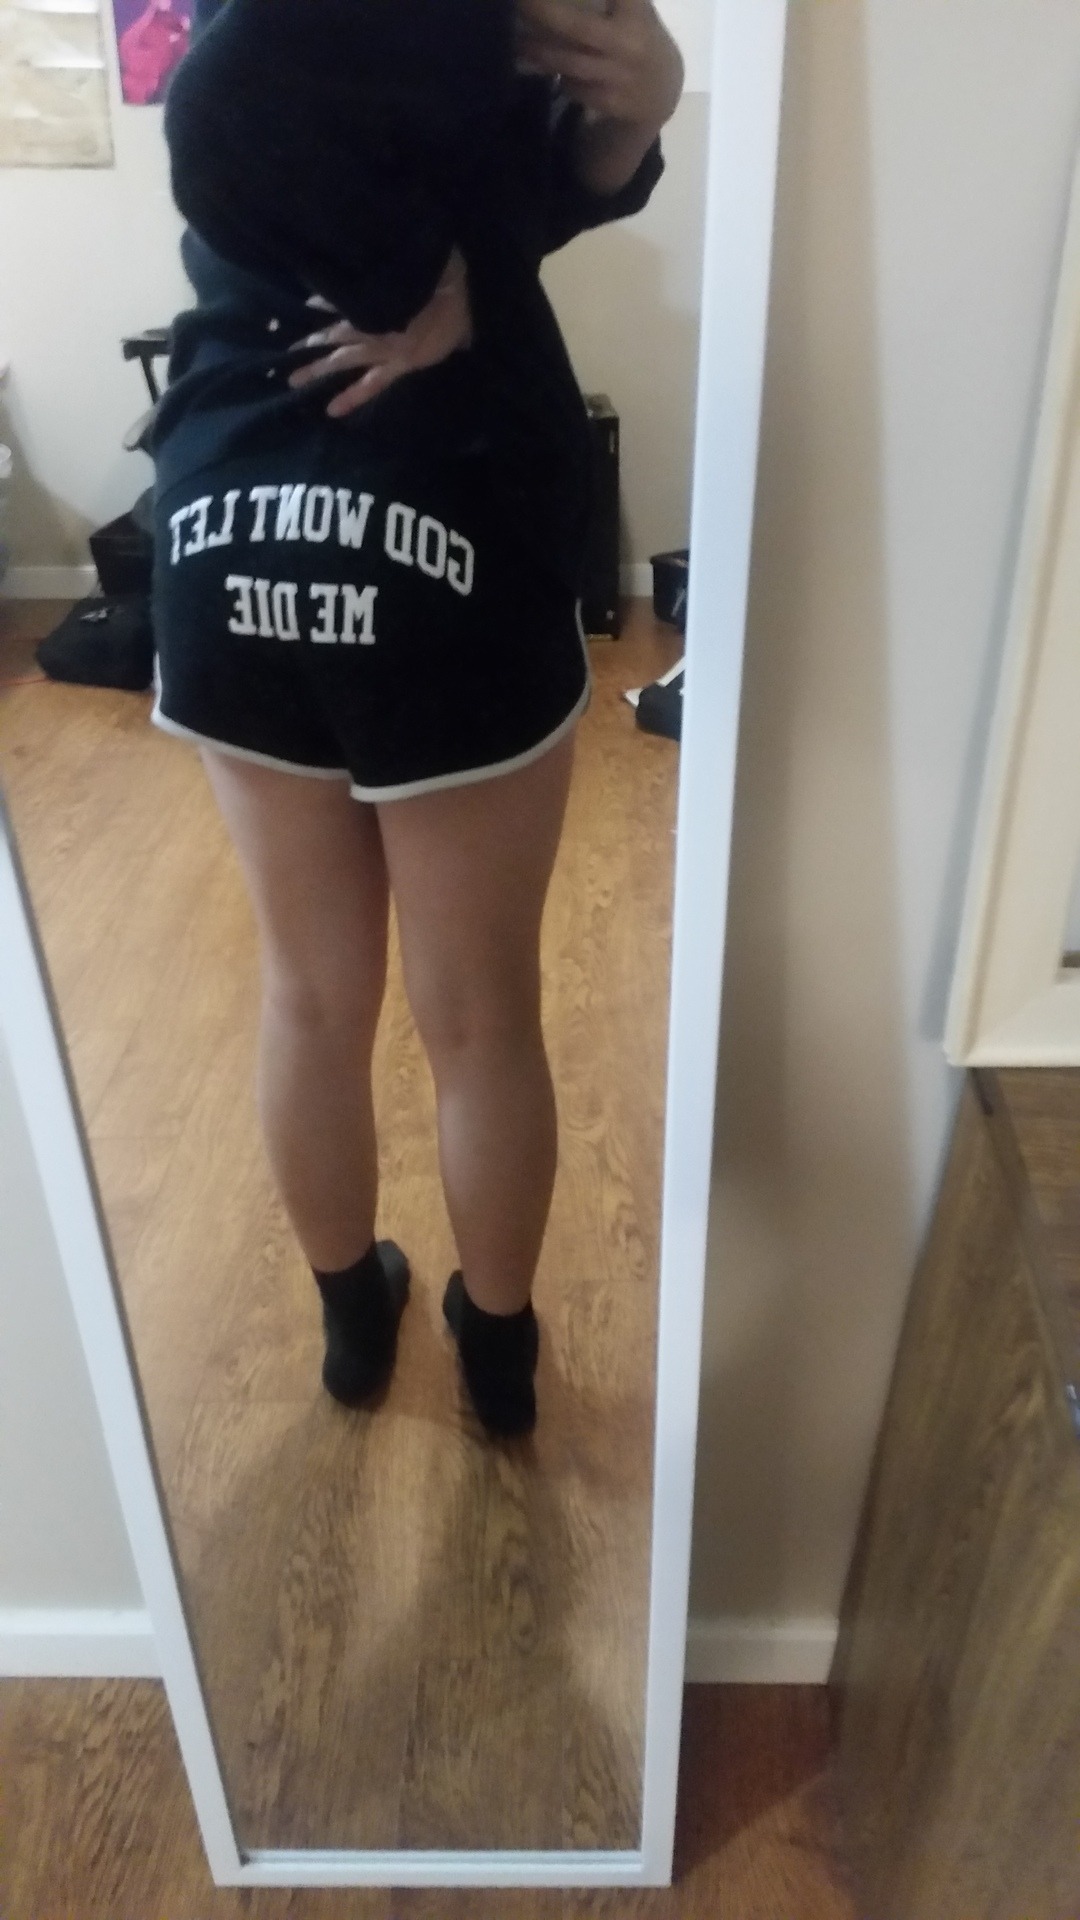 Booty shorts tumbler